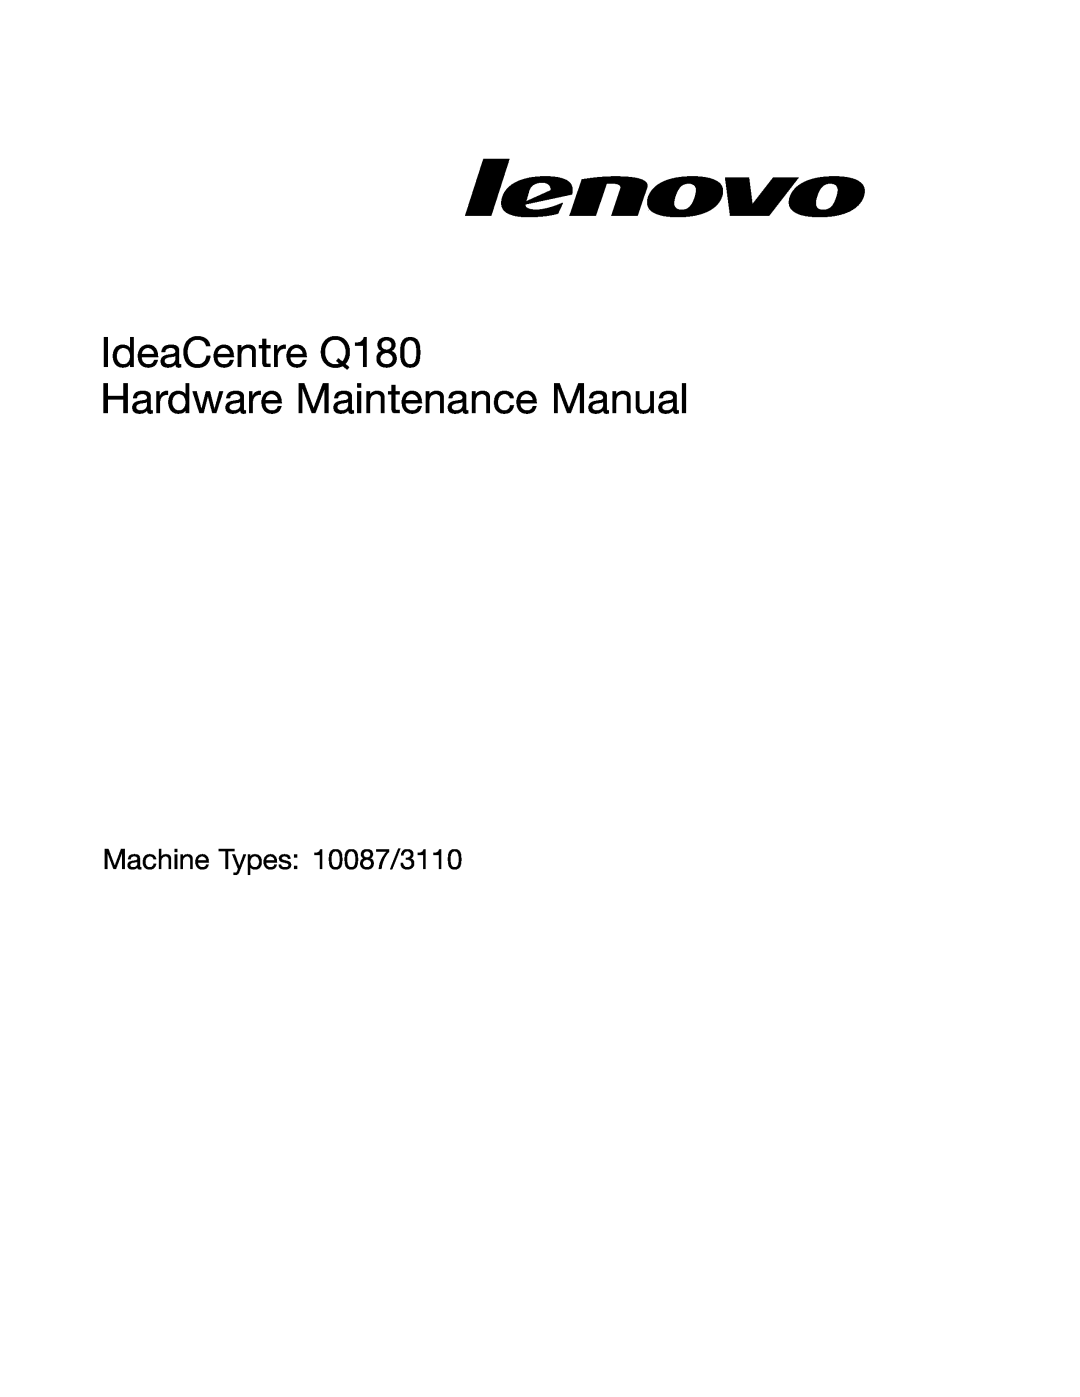 Lenovo manual IdeaCentre Q180 Hardware Maintenance Manual, Machine Types 10087/3110 